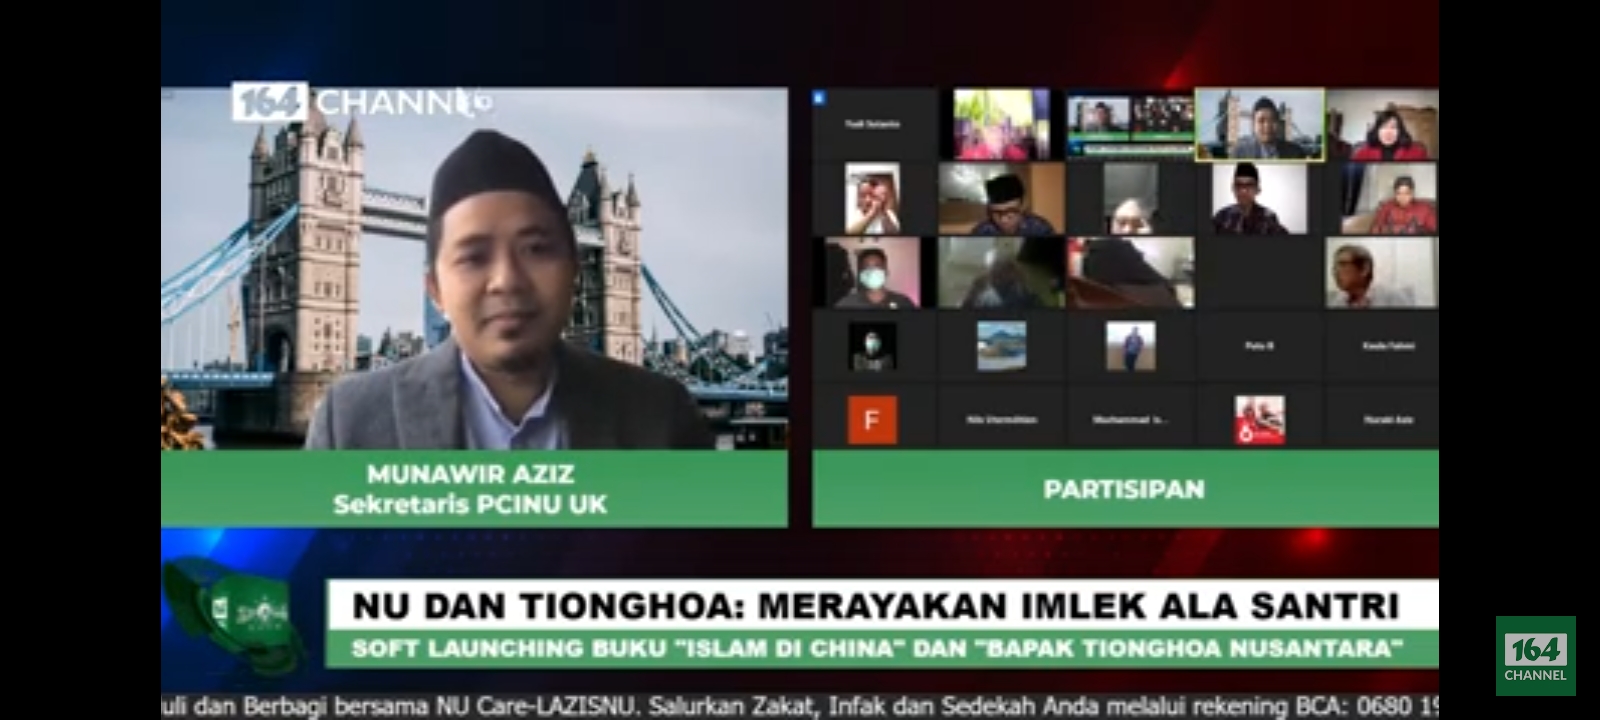 Munawir Aziz dalam diskusi "NU & Tionghoa: Merayakan Imlek ala Santri" via daring. (Foto: Istimewa)